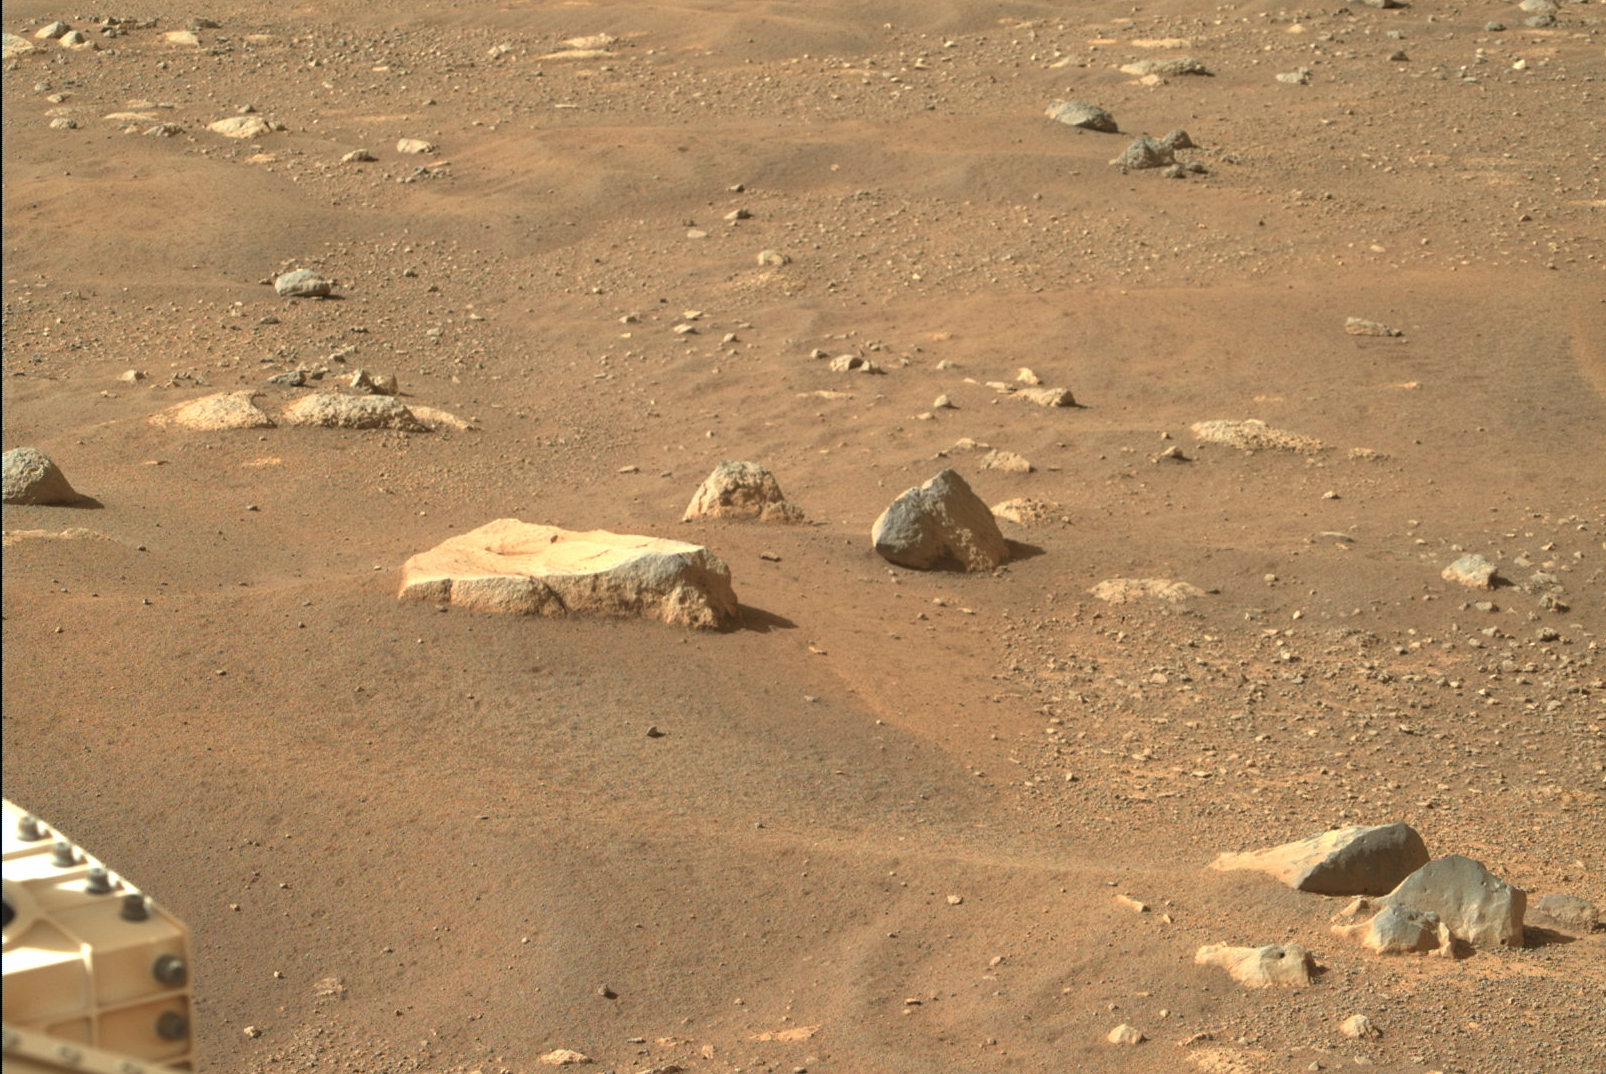 Rocks on Mars. (Image: NASA/JPL-Caltech/ASU)